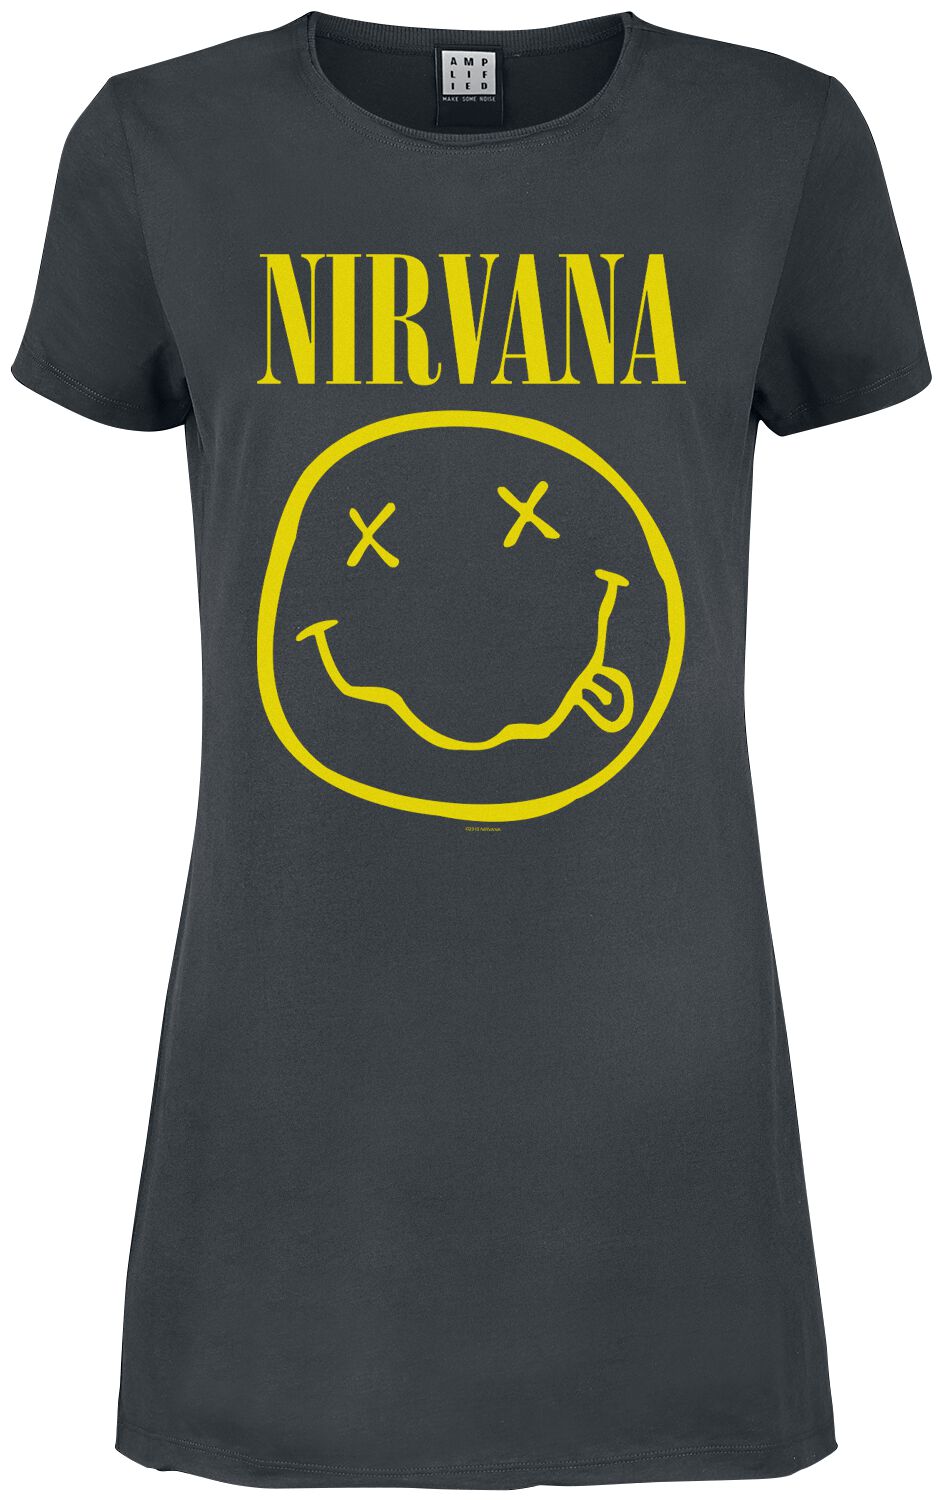 Robe courte de Nirvana - Amplified Collection - Smiley - S à XXL - pour Femme - anthracite